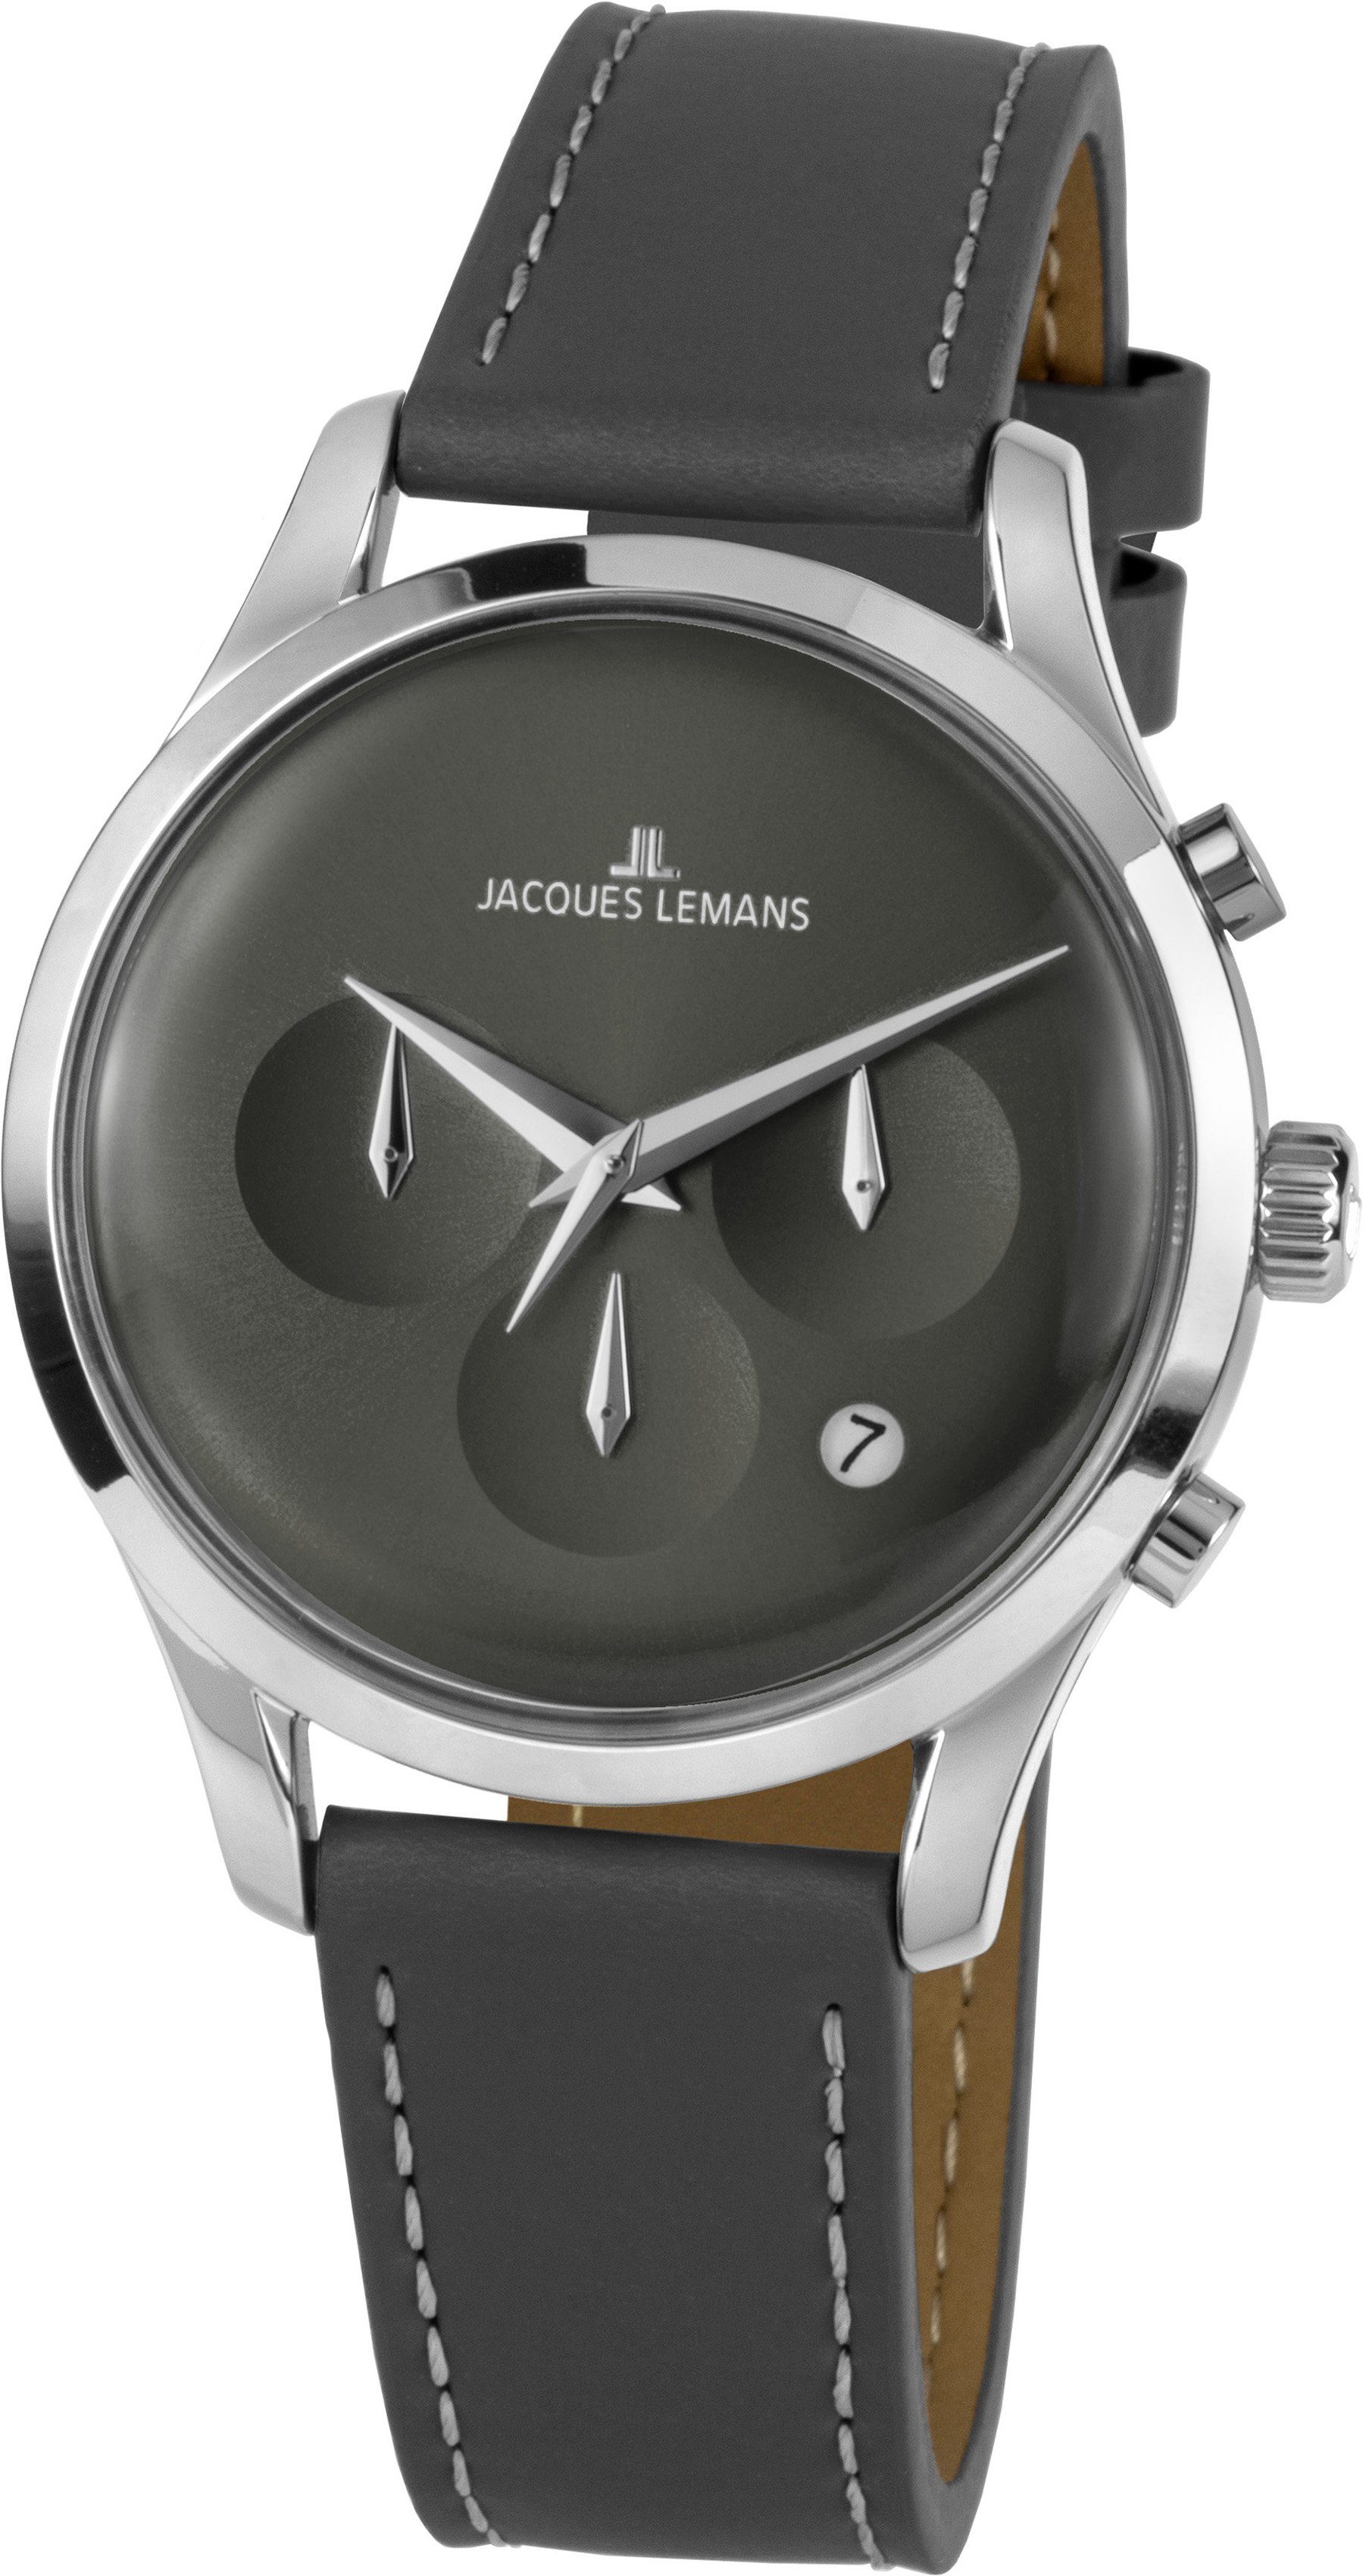 Jacques Lemans Chronograph Retro Classic, 1-2067A grau | Quarzuhren